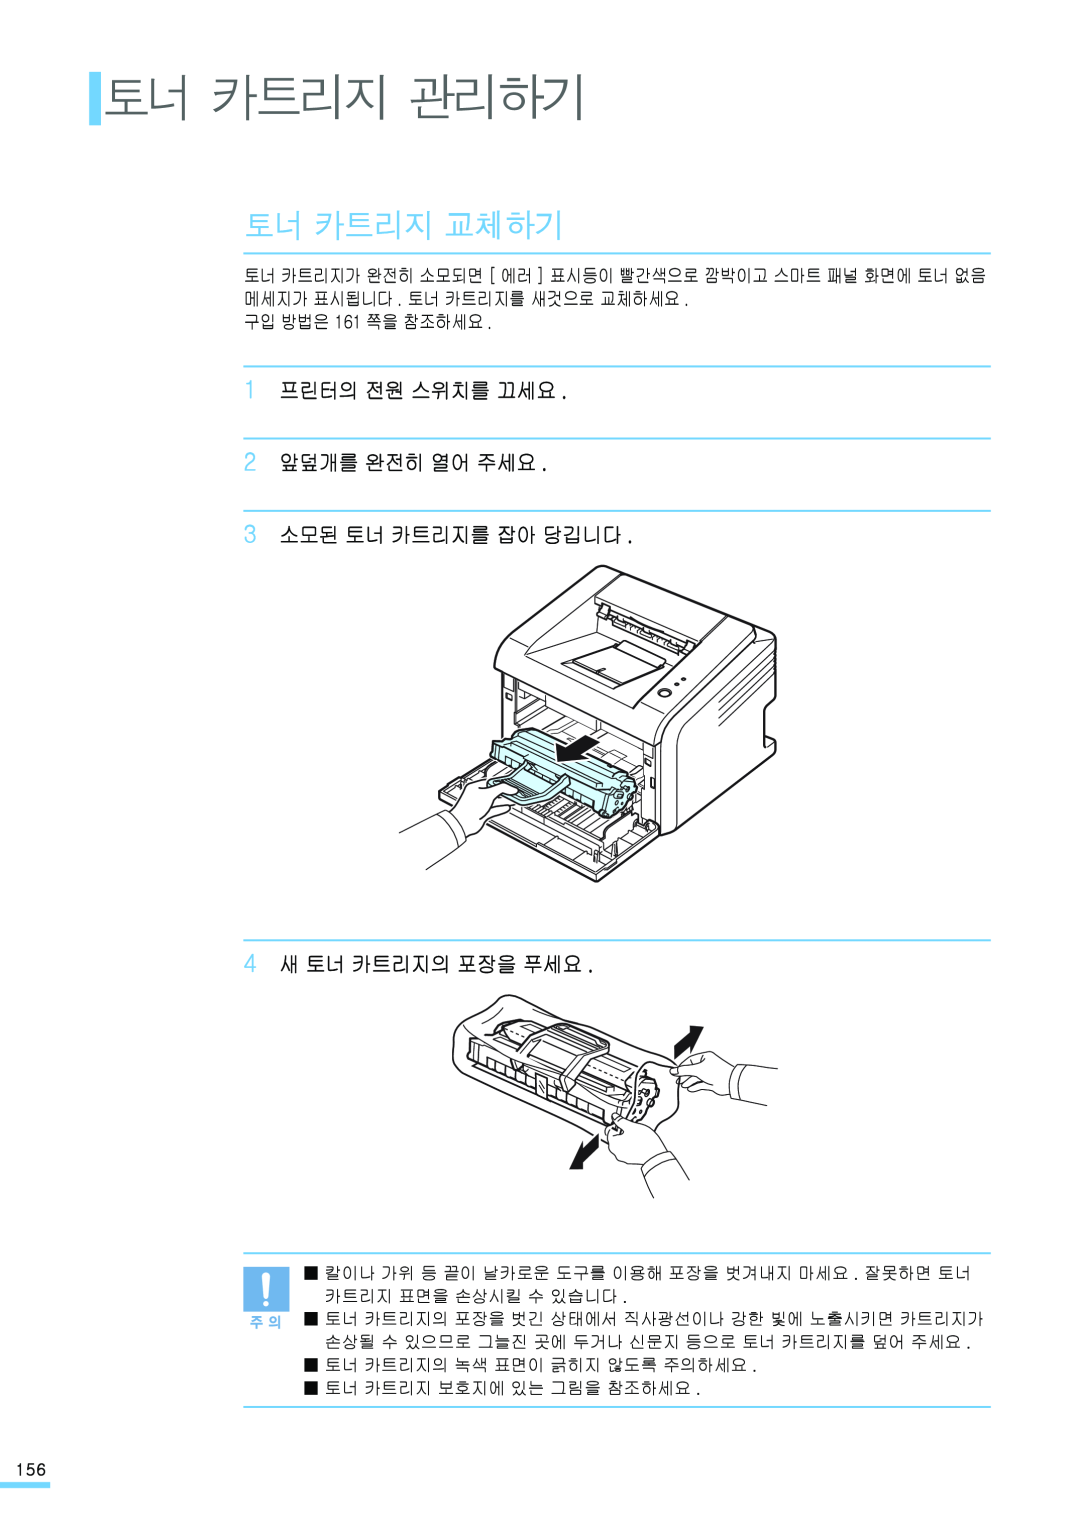 Samsung ML-2571N manual 토너 카트리지 관리하기, 토너 카트리지 교체하기, 1 프린터의 전원 스위치를 끄세요 2 앞덮개를 완전히 열어 주세요 3 소모된 토너 카트리지를 잡아 당깁니다 